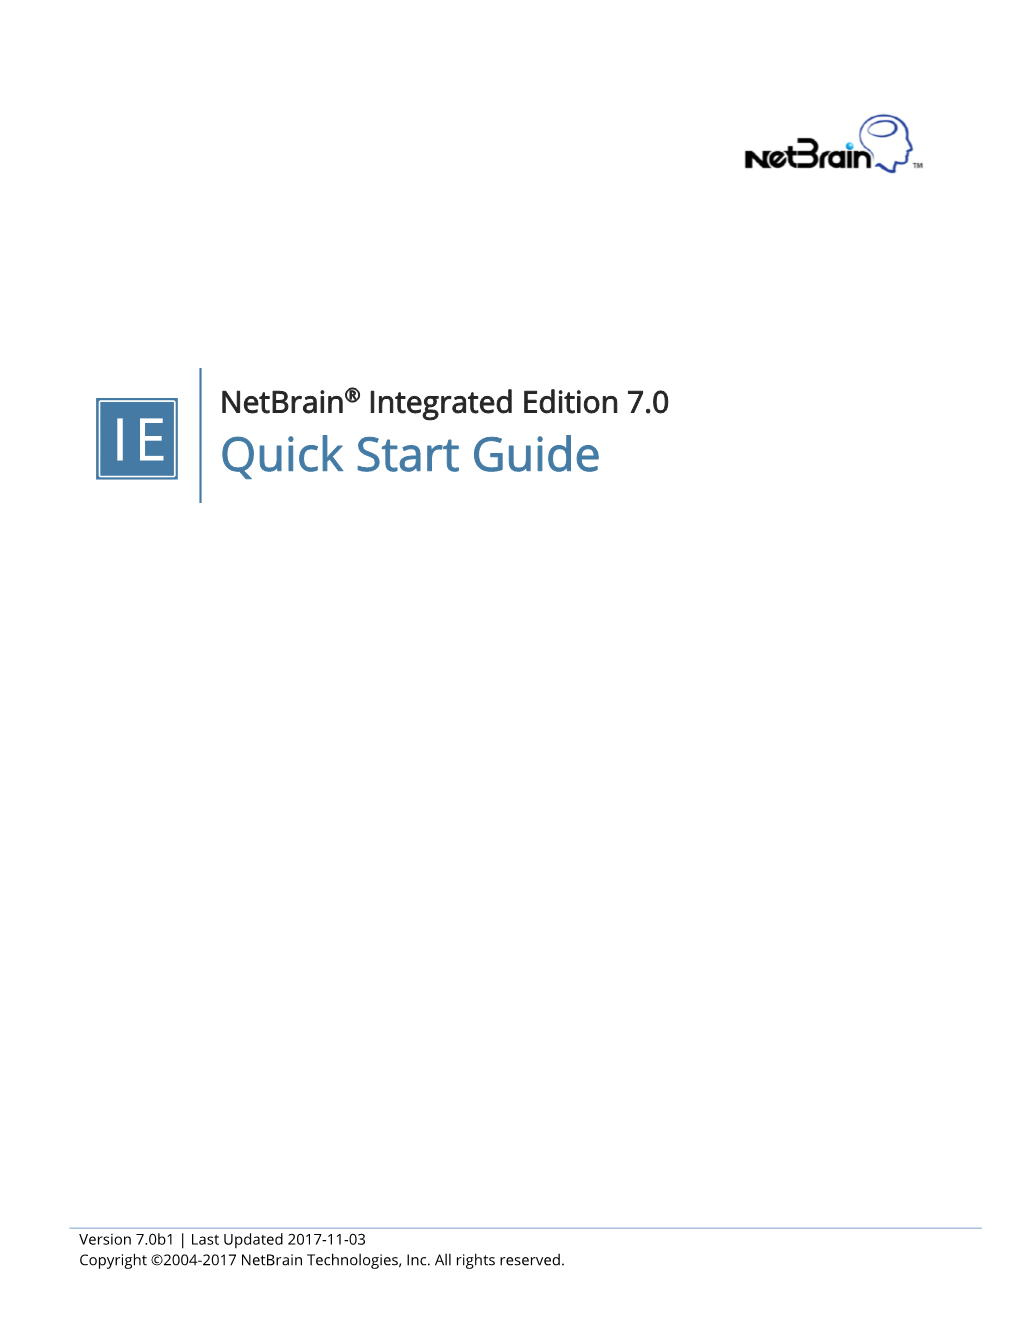 Netbrain Integrated Edition Quick Start Guide